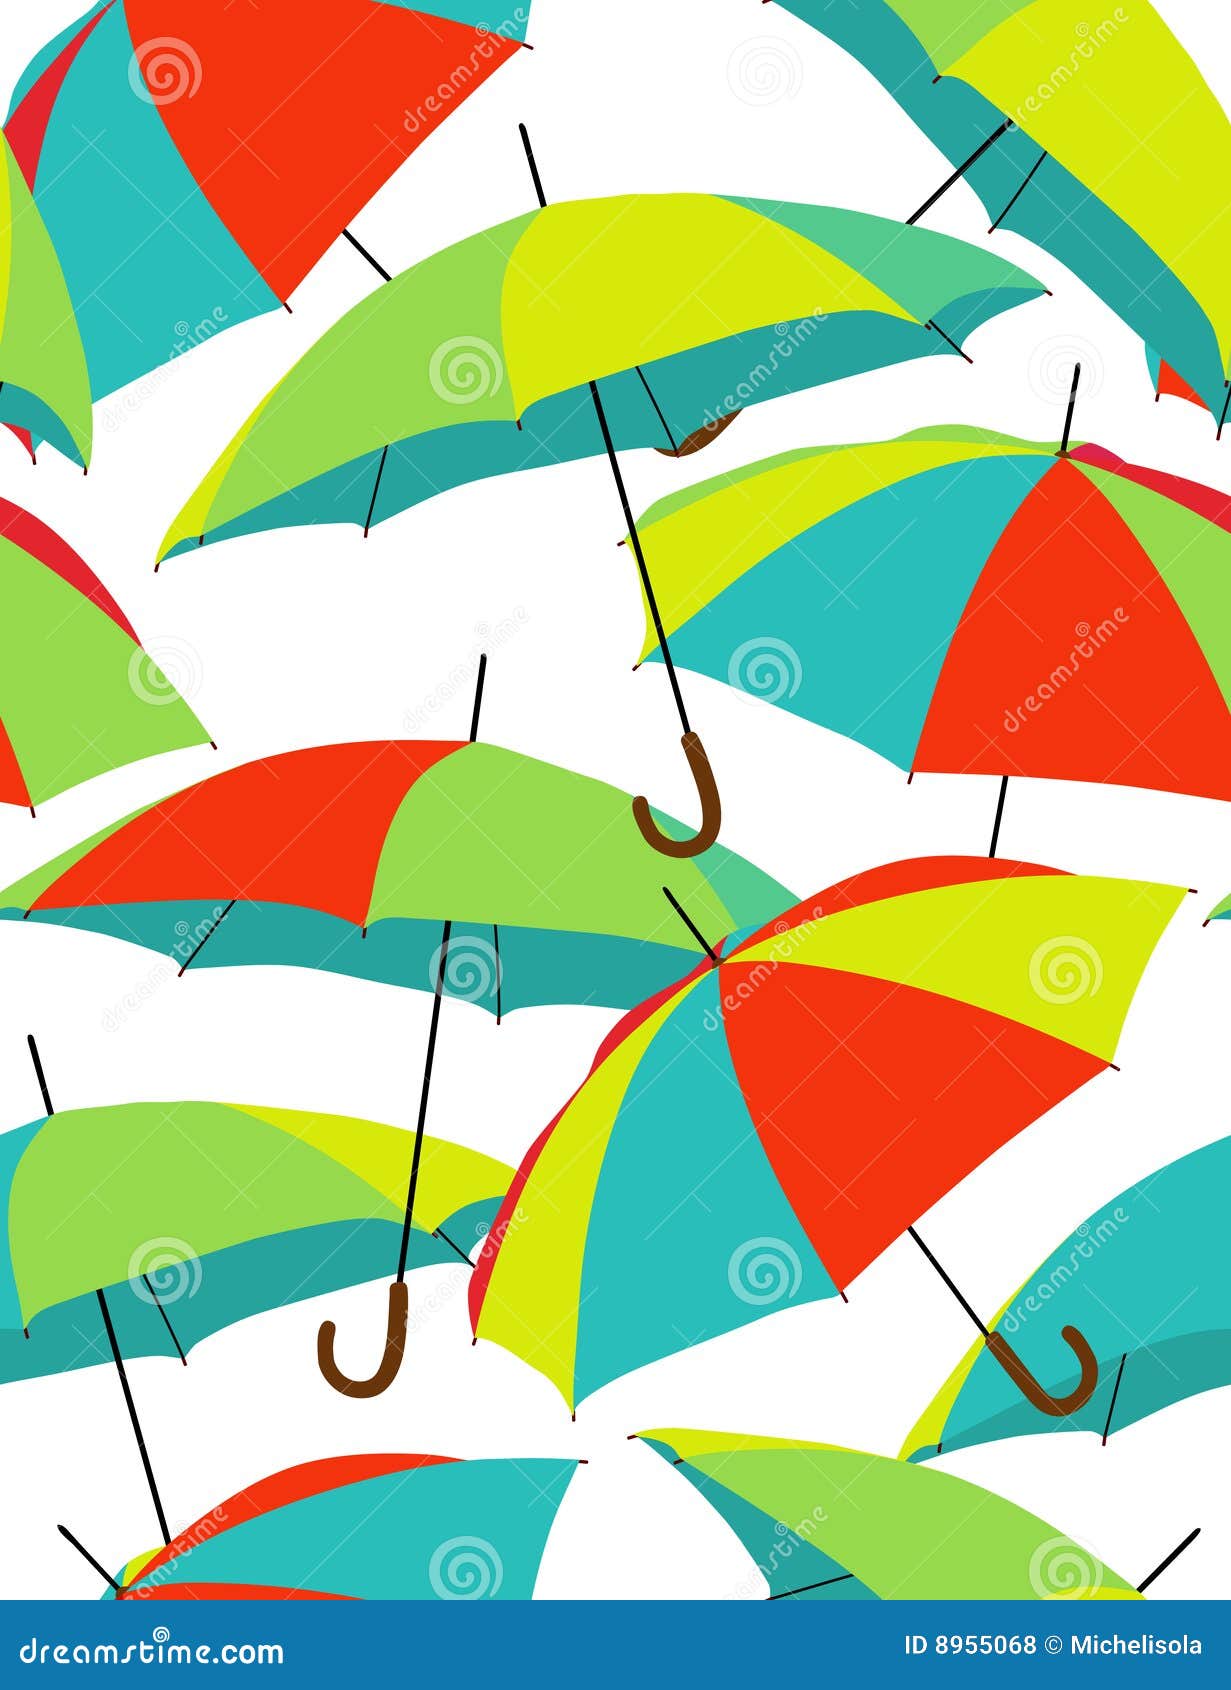 rainbow umbrella clip art - photo #31